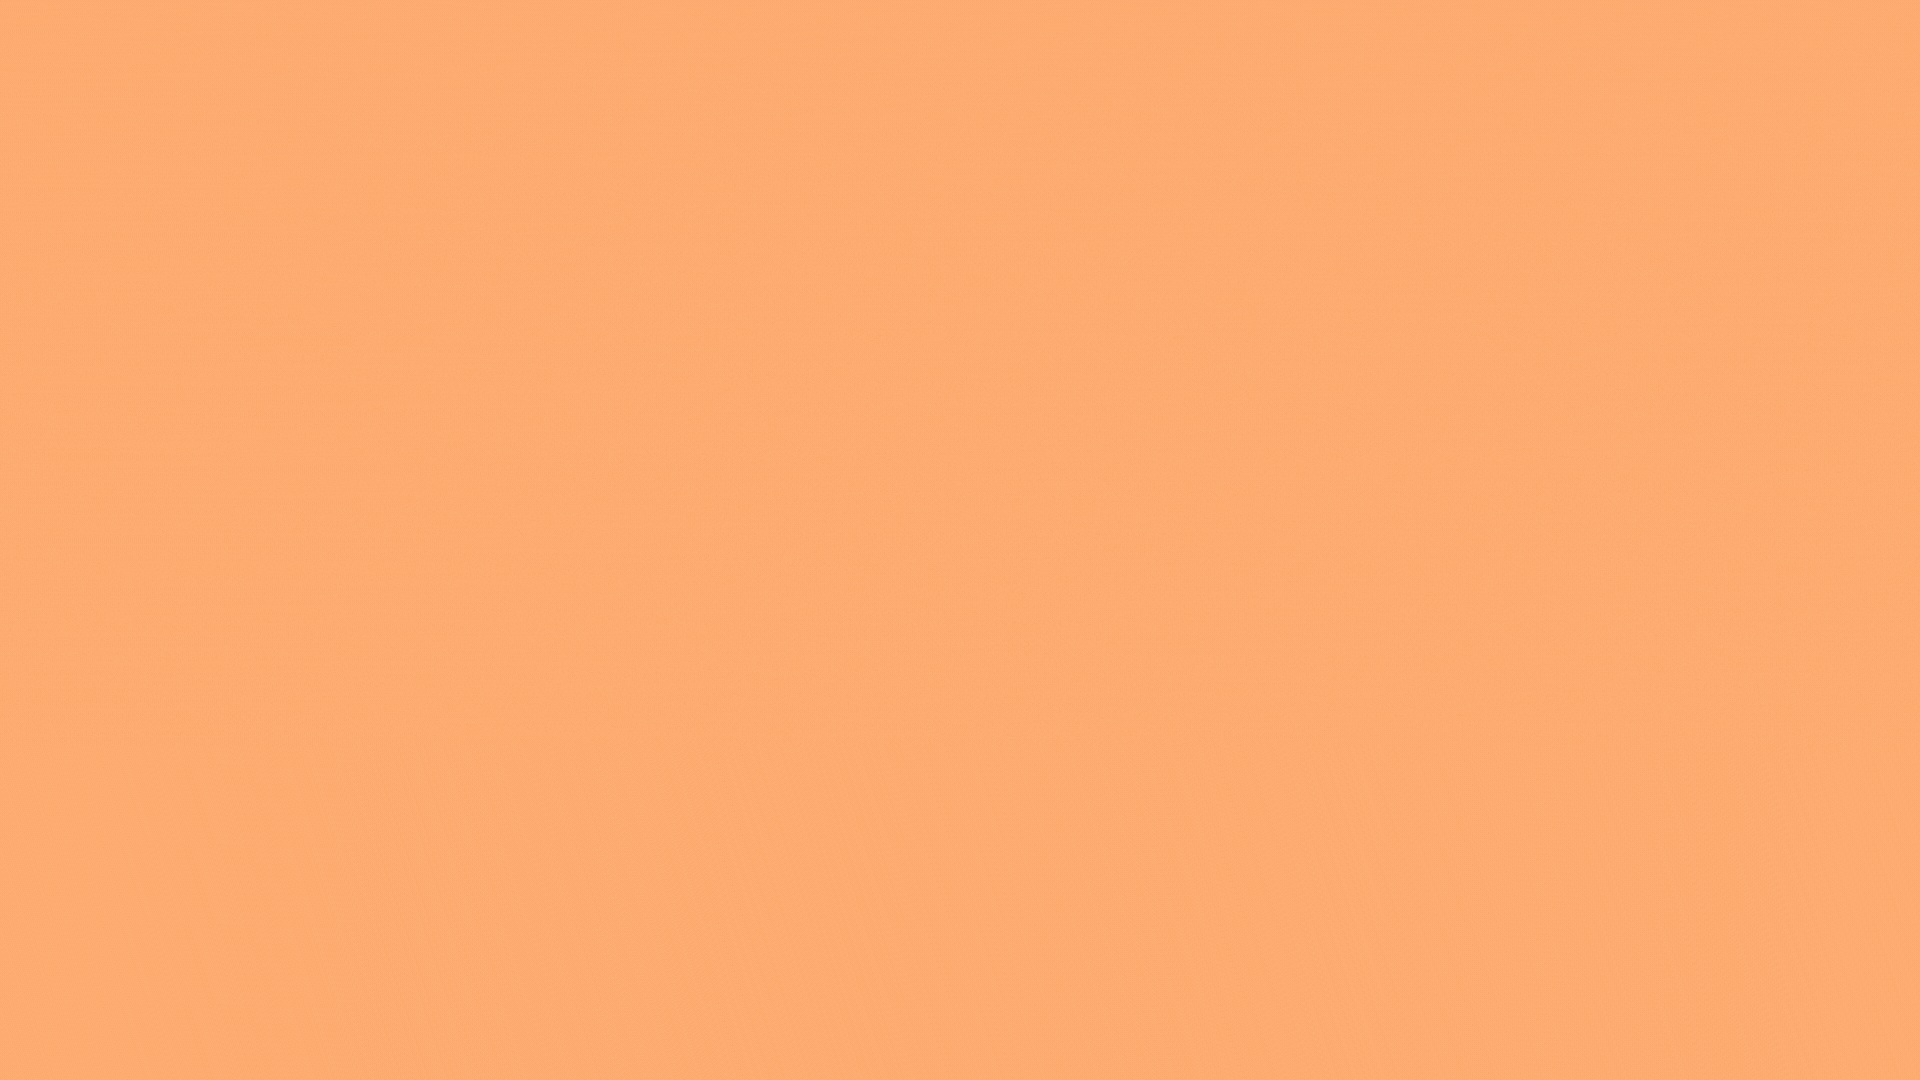 Orange 3로 데이터분석 쉽게하기(5기)